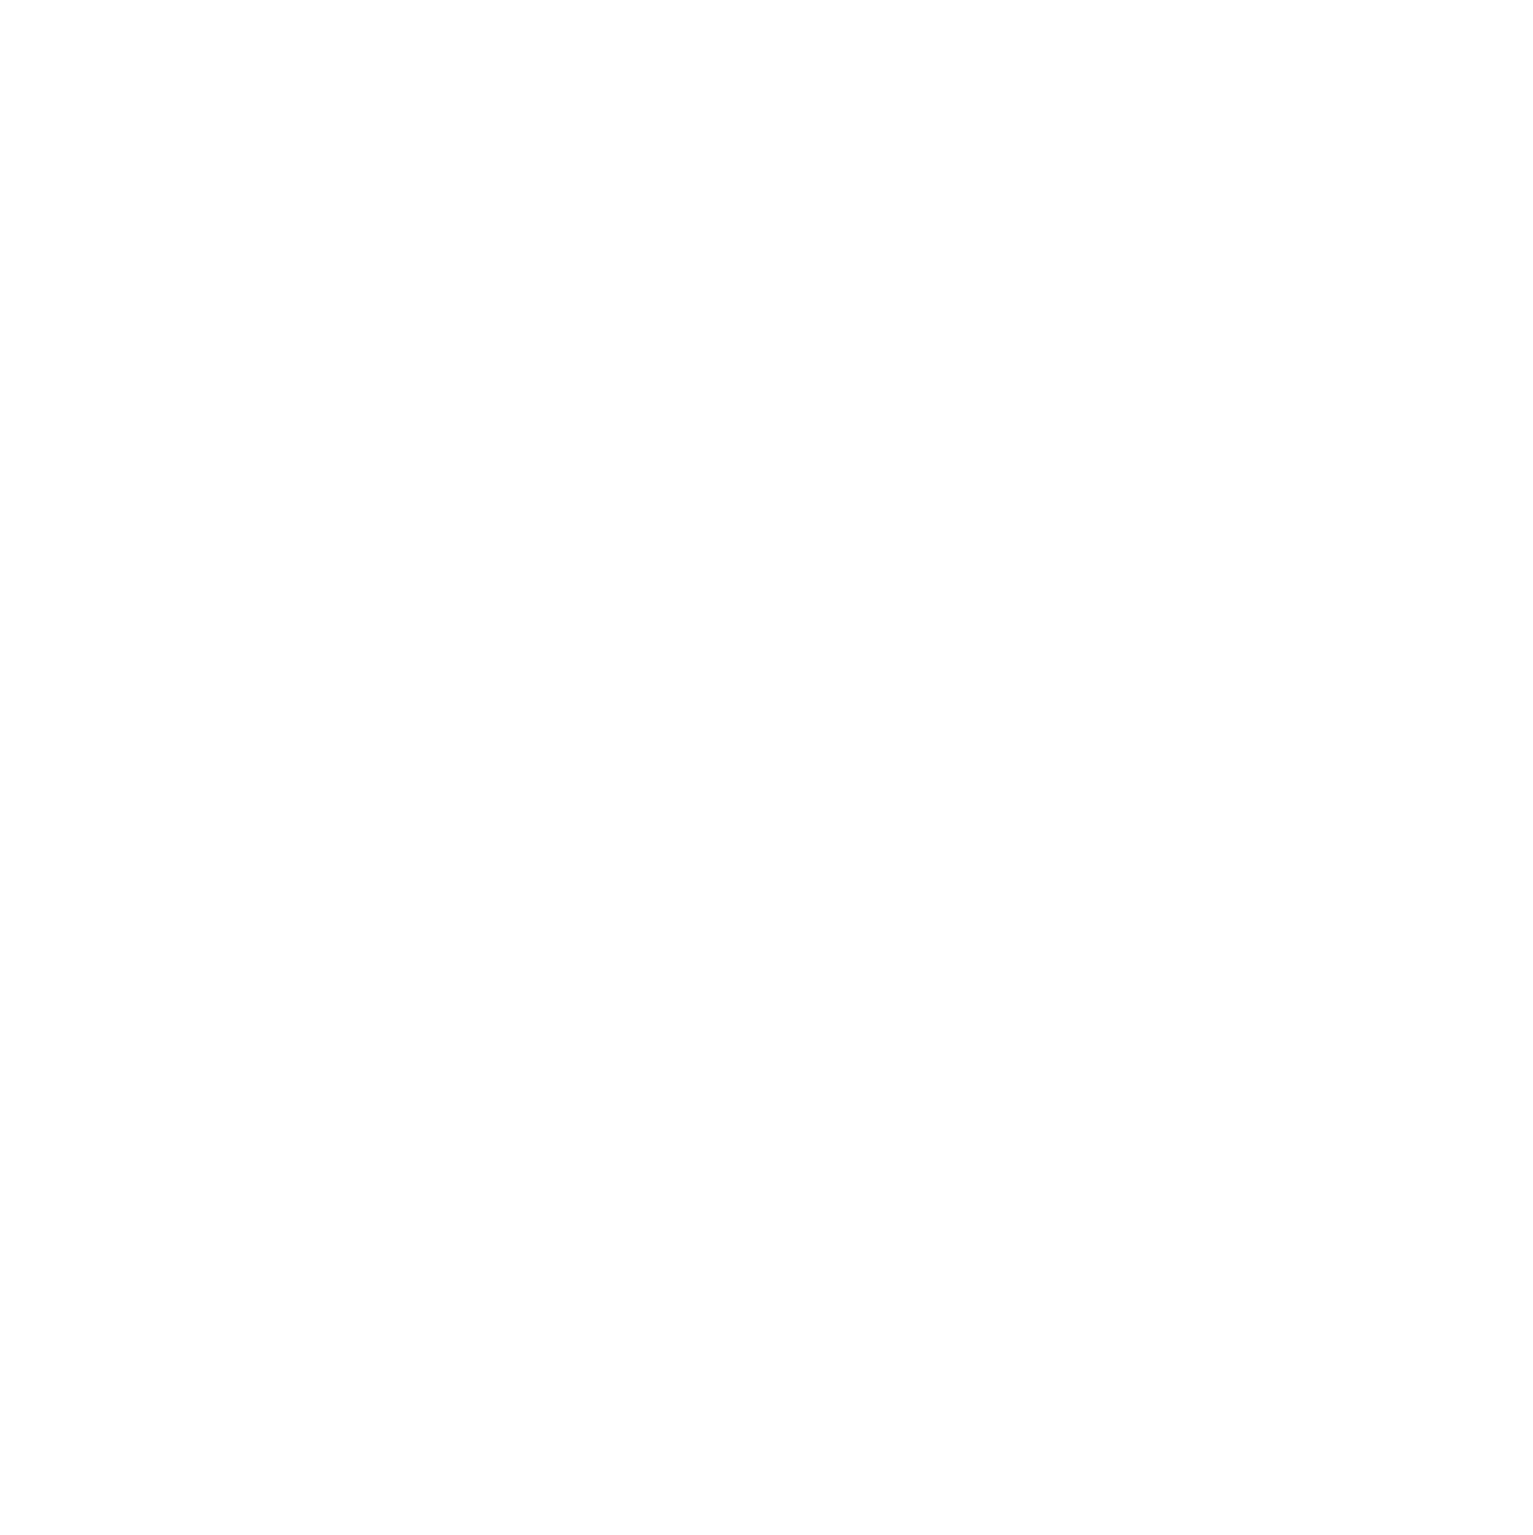 CrossFit Legendary